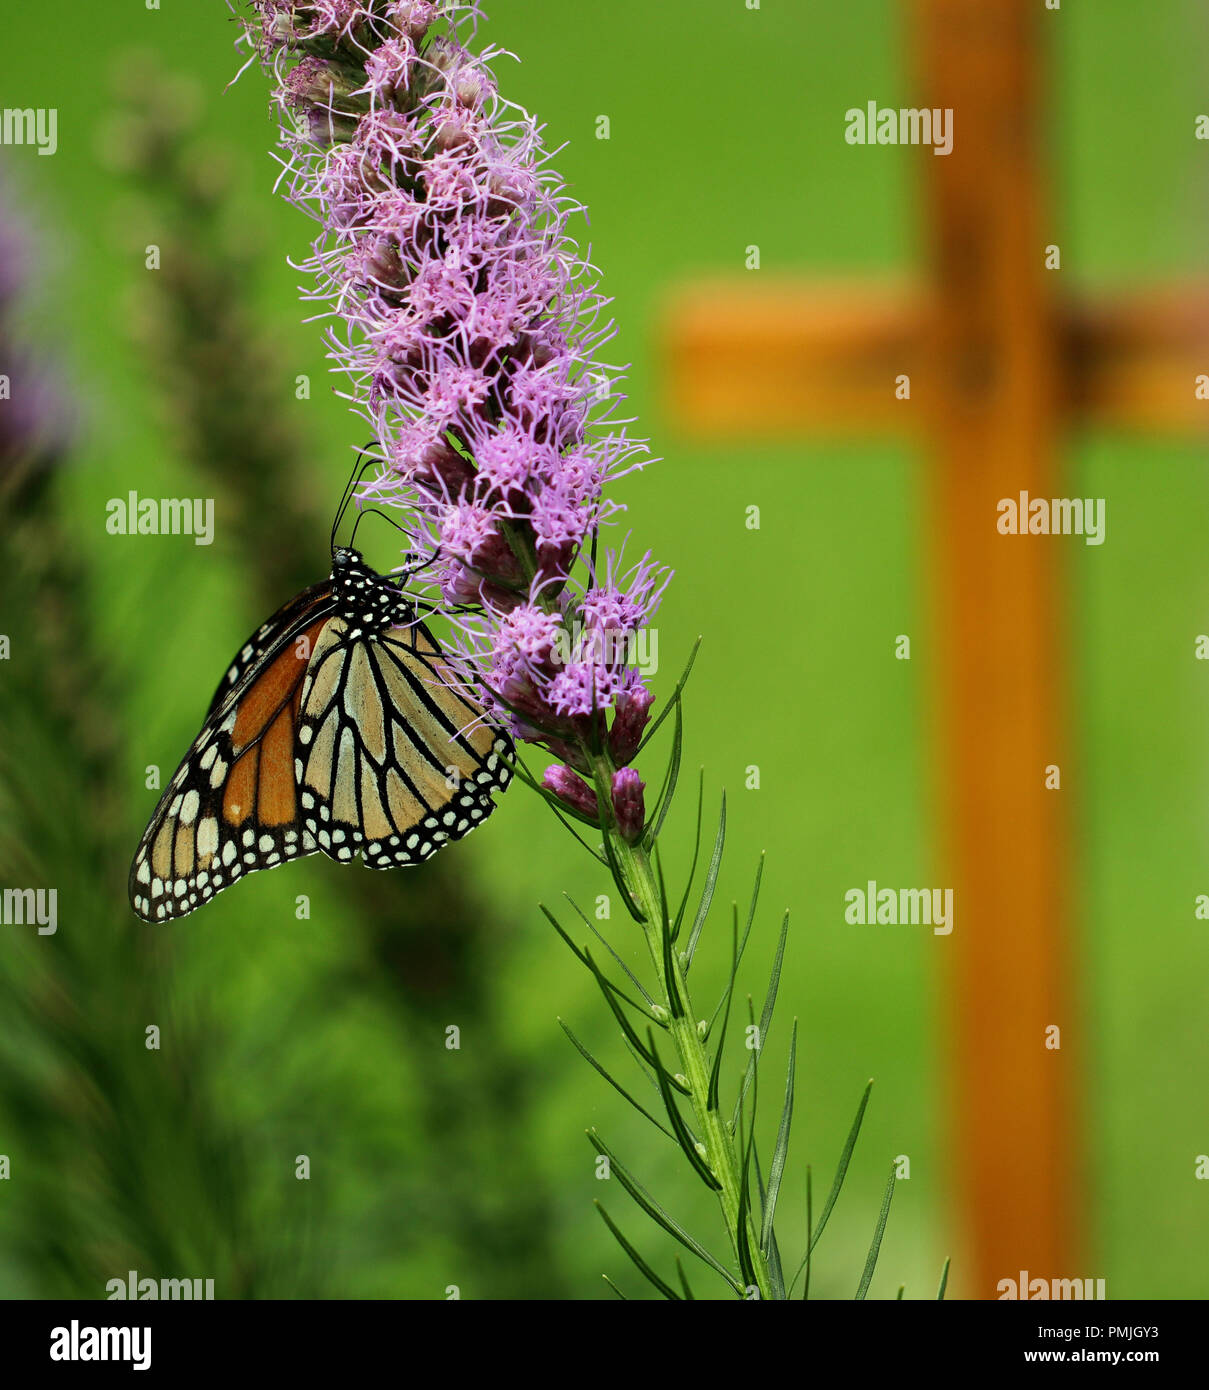 A Monarch butterfly (Danaus plexippus), also known as the milkweed butterfly, feeding in a New England garden on blazing star (Liatris spicata) Stock Photo